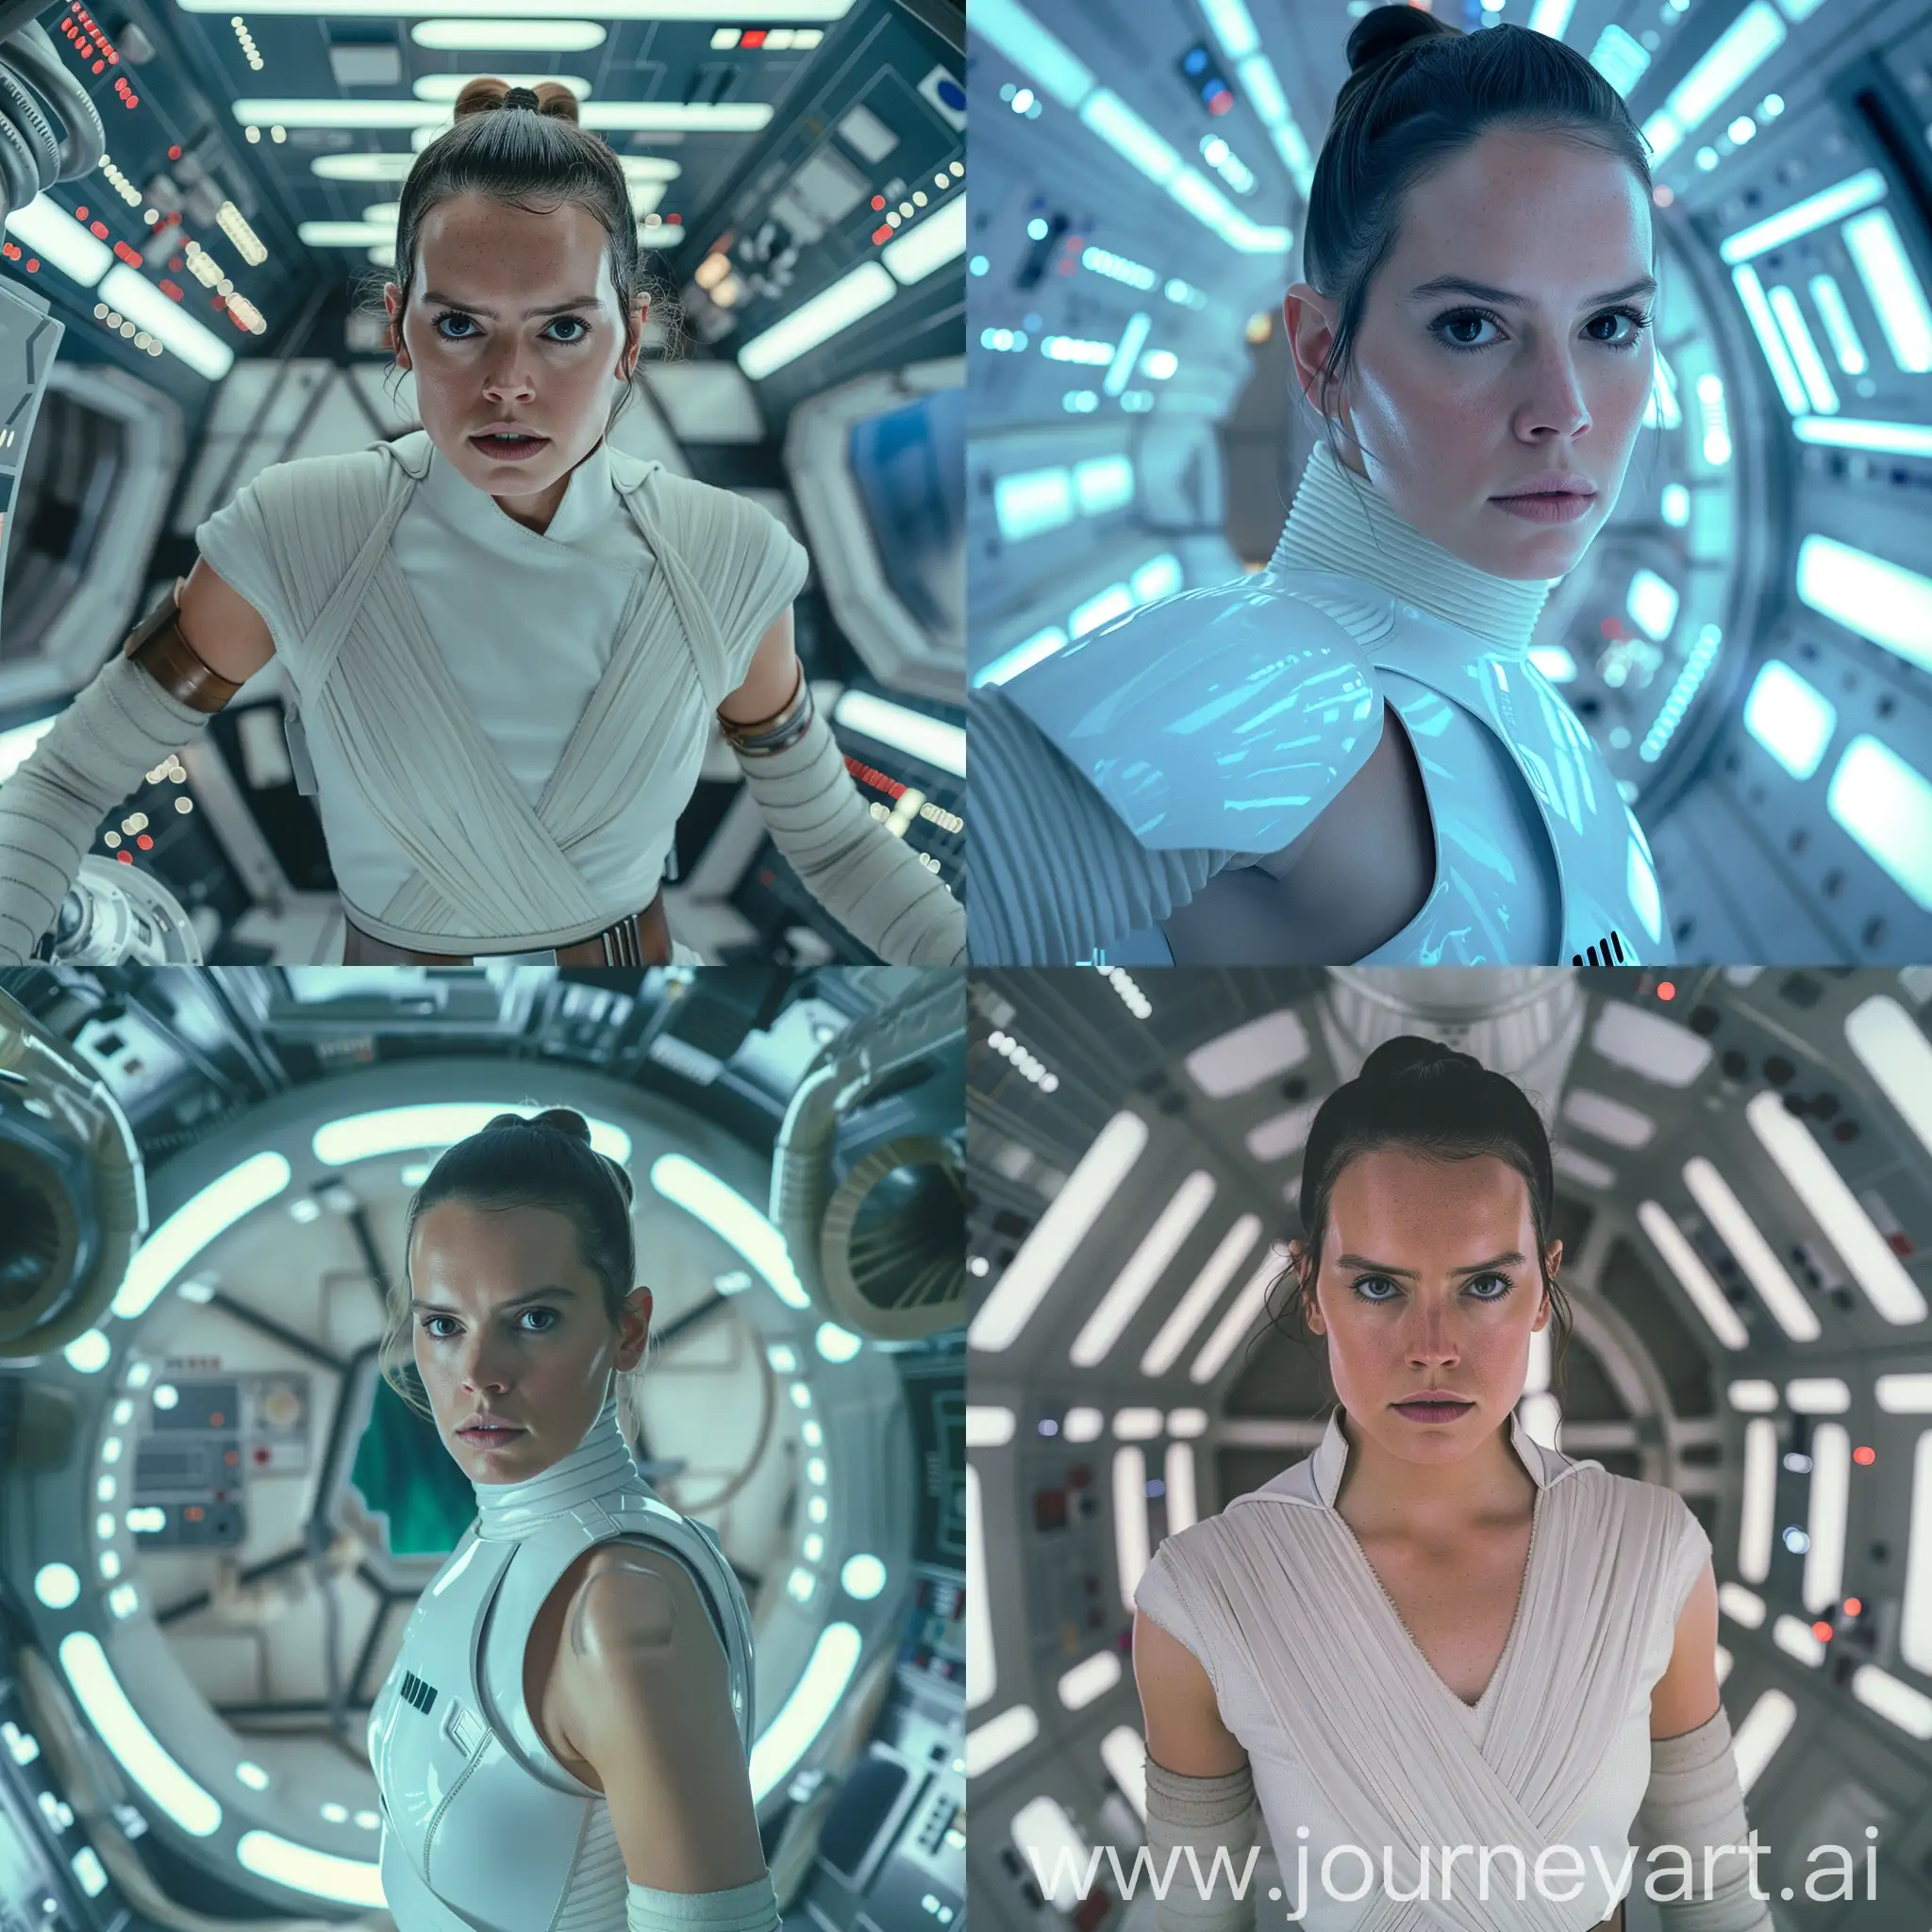 Rey-Skywalker-in-Futuristic-White-Cyber-Suit-aboard-Spaceship